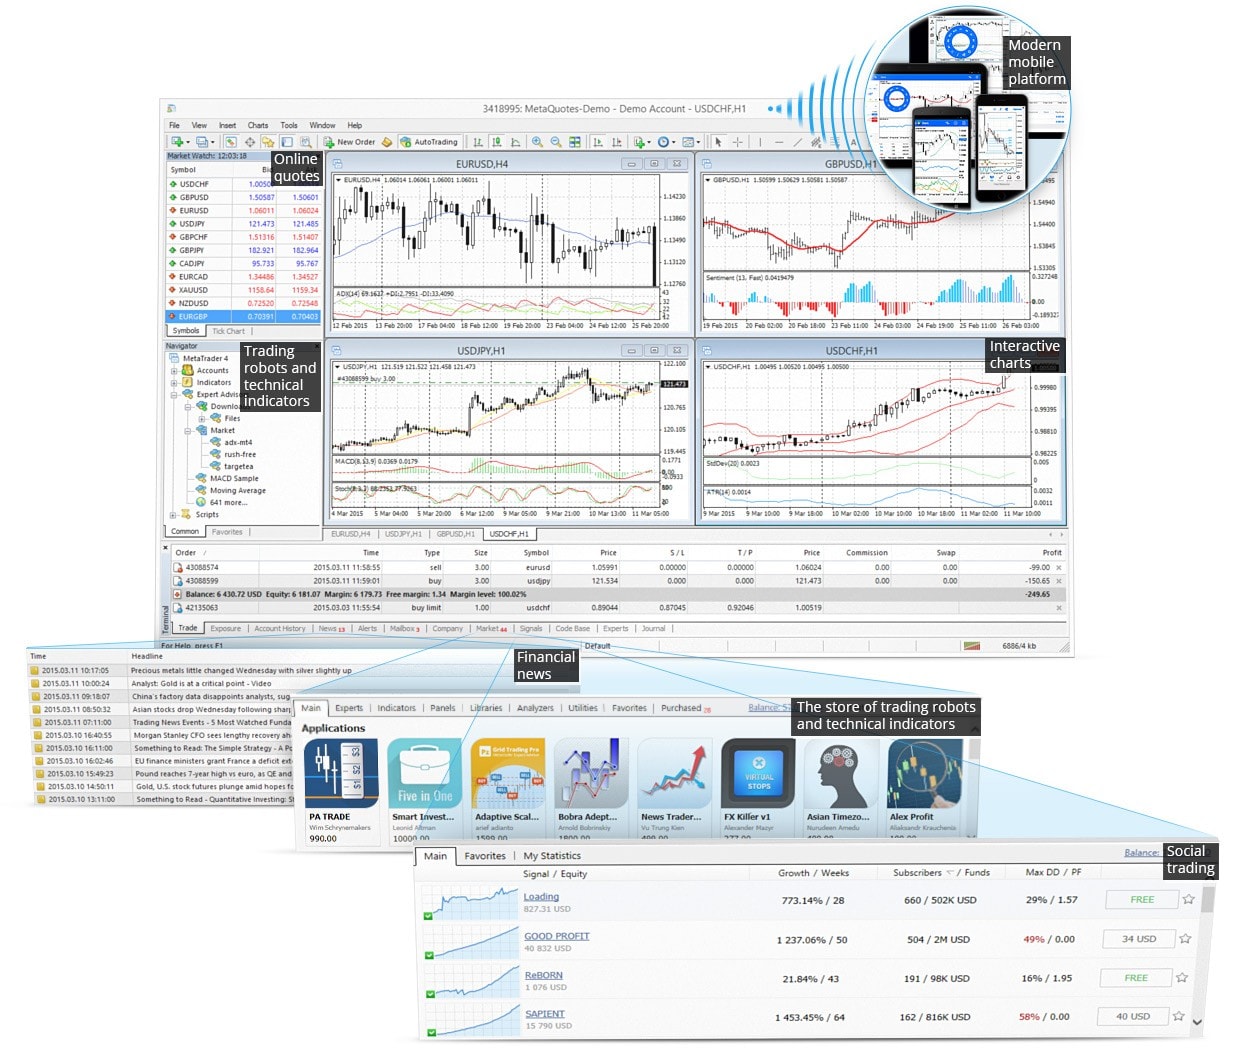 MetaTrader 4 ultimate Trading Platform: trading robots, technical indicators, interactive charts, social trading, Market and financial news